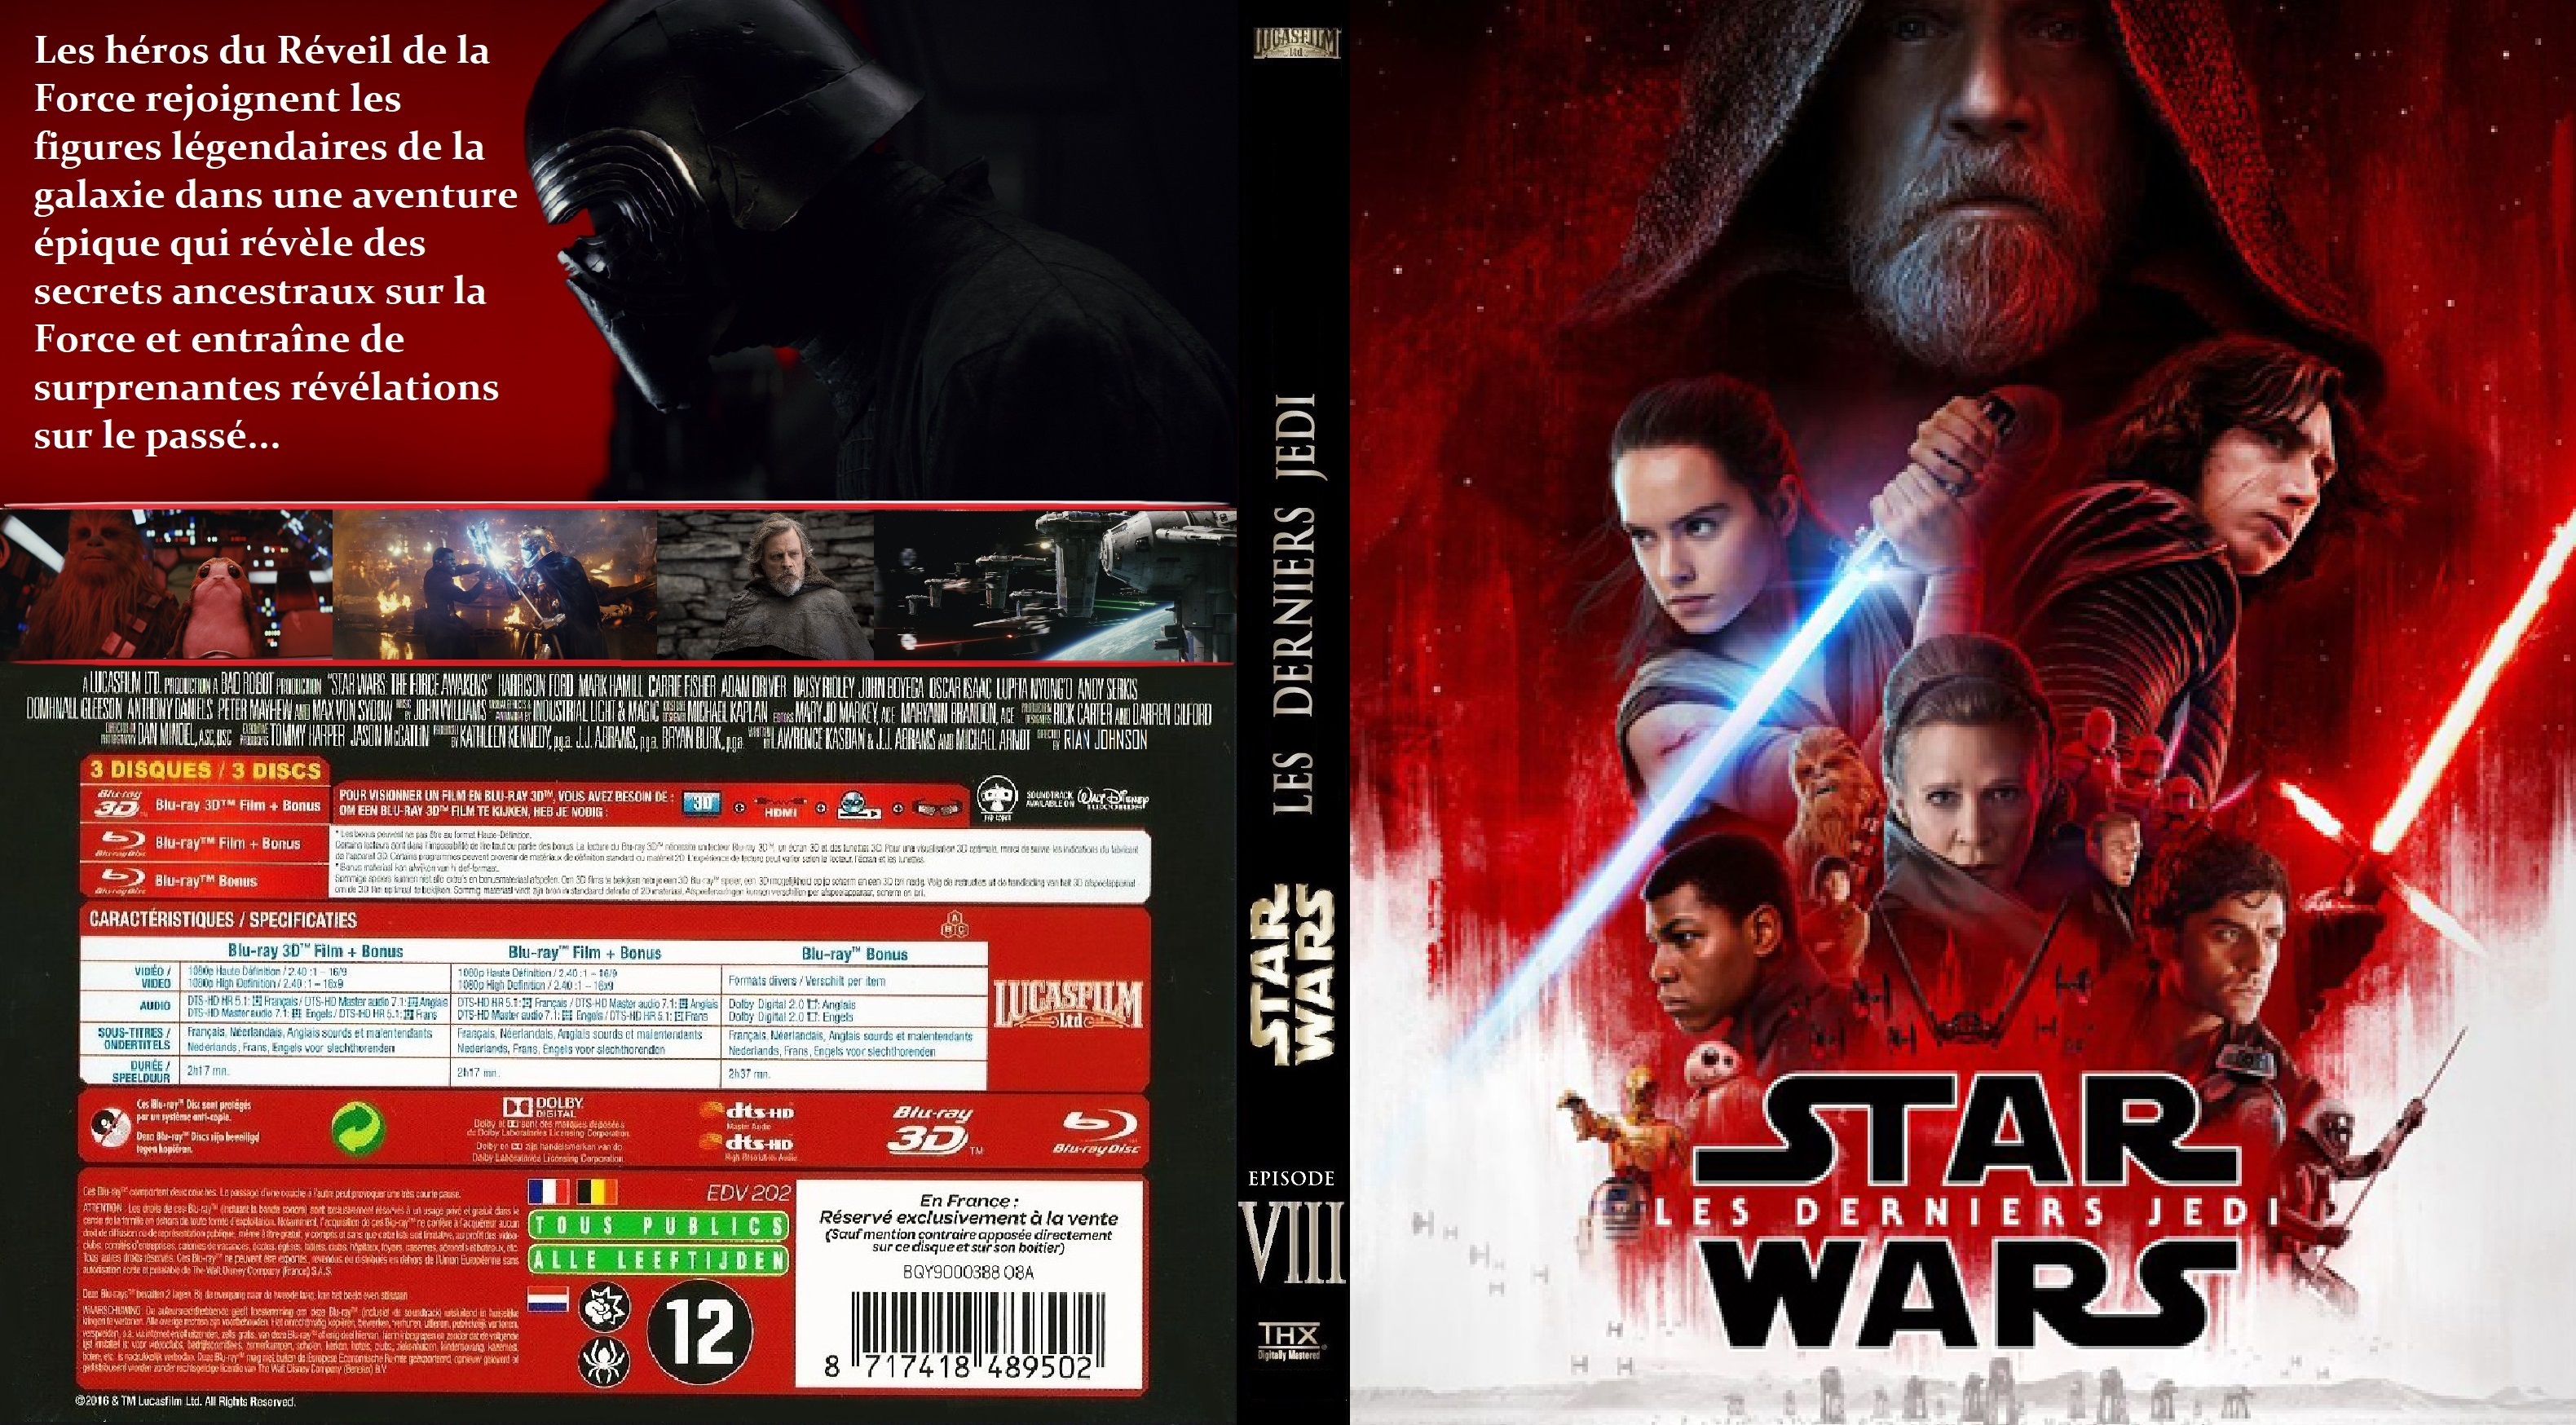 Jaquette DVD Star Wars Episode VIII Les Derniers Jedi custom (BLU-RAY) v2